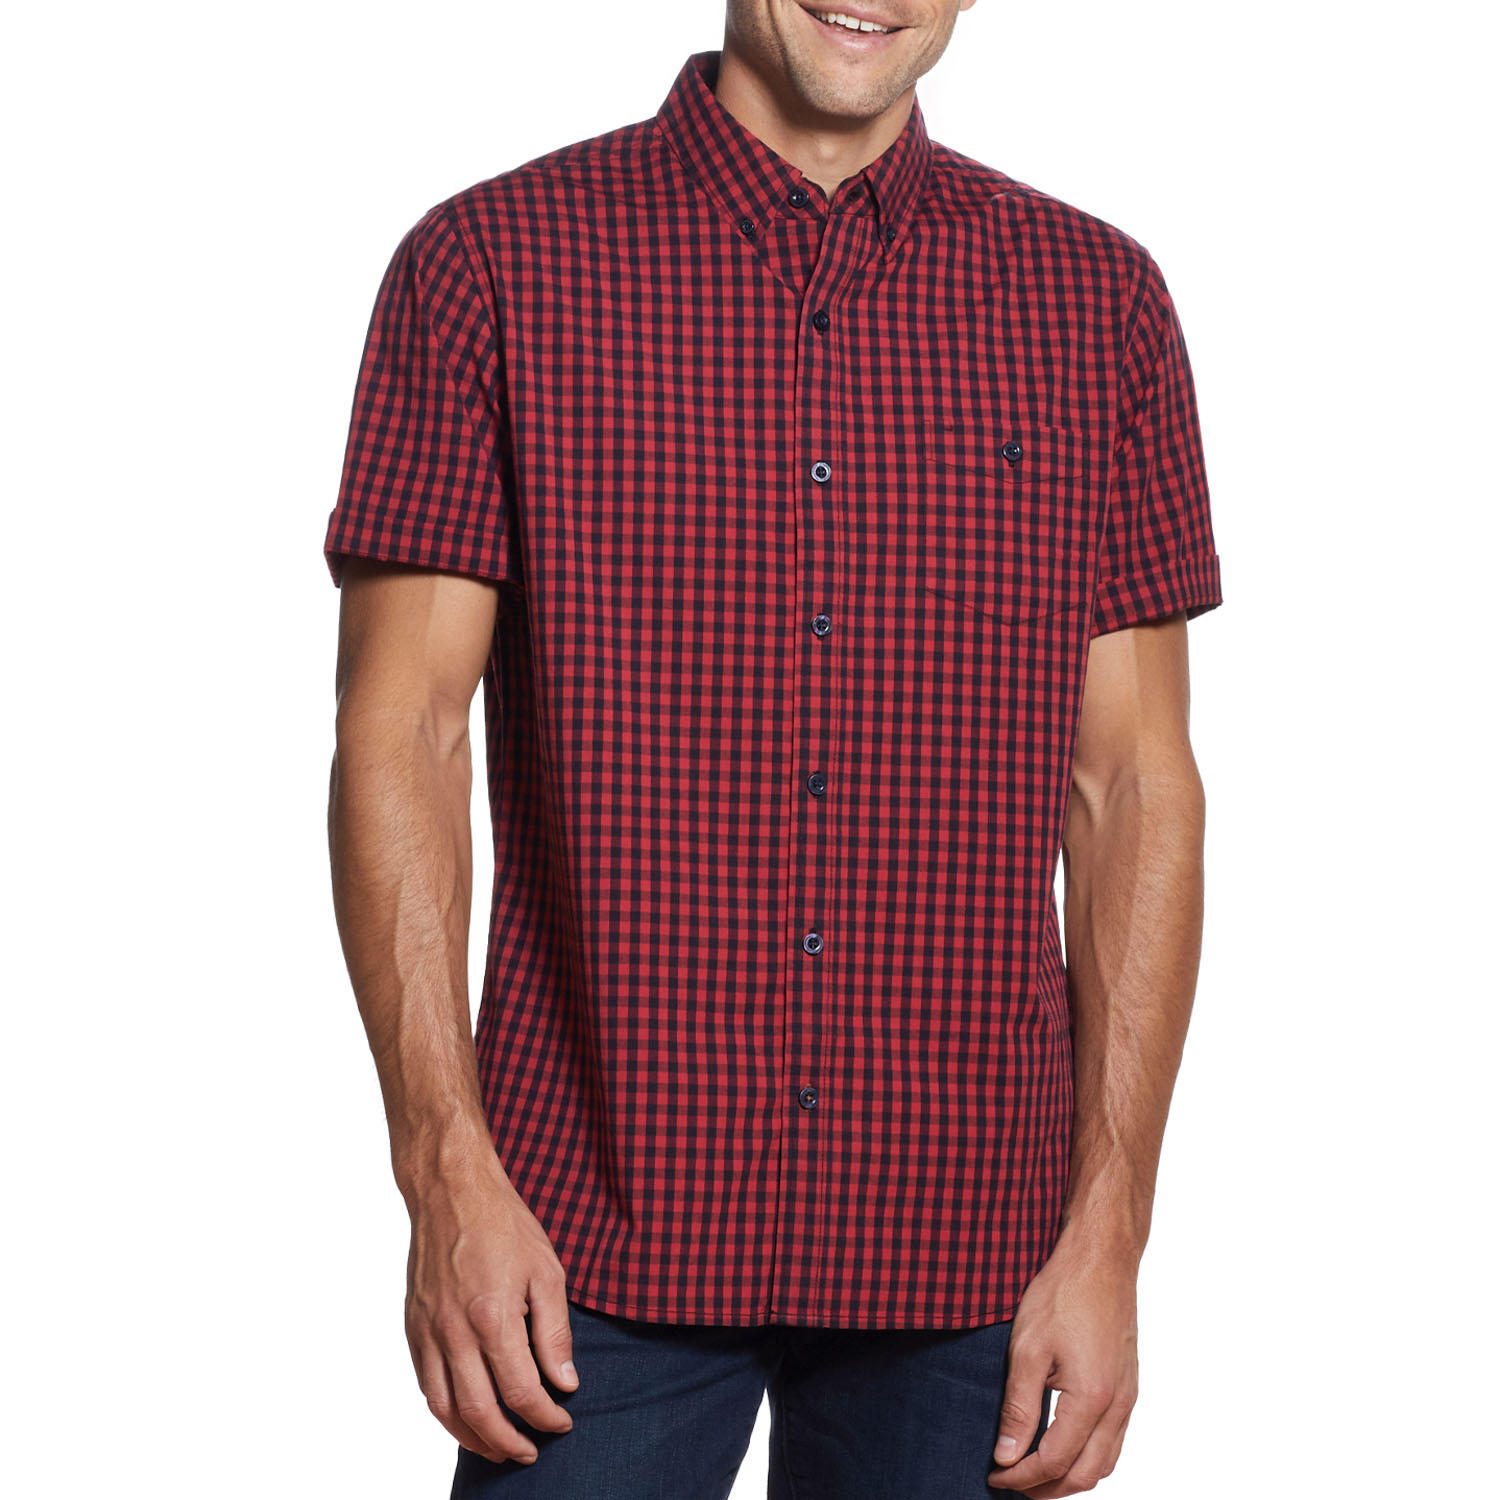 WP Weatherproof Men's Short Sleeve Woven Shirt | Button Down Casual Shirt | Poplin Neat Print & Gingham Check Plaid - Red Small